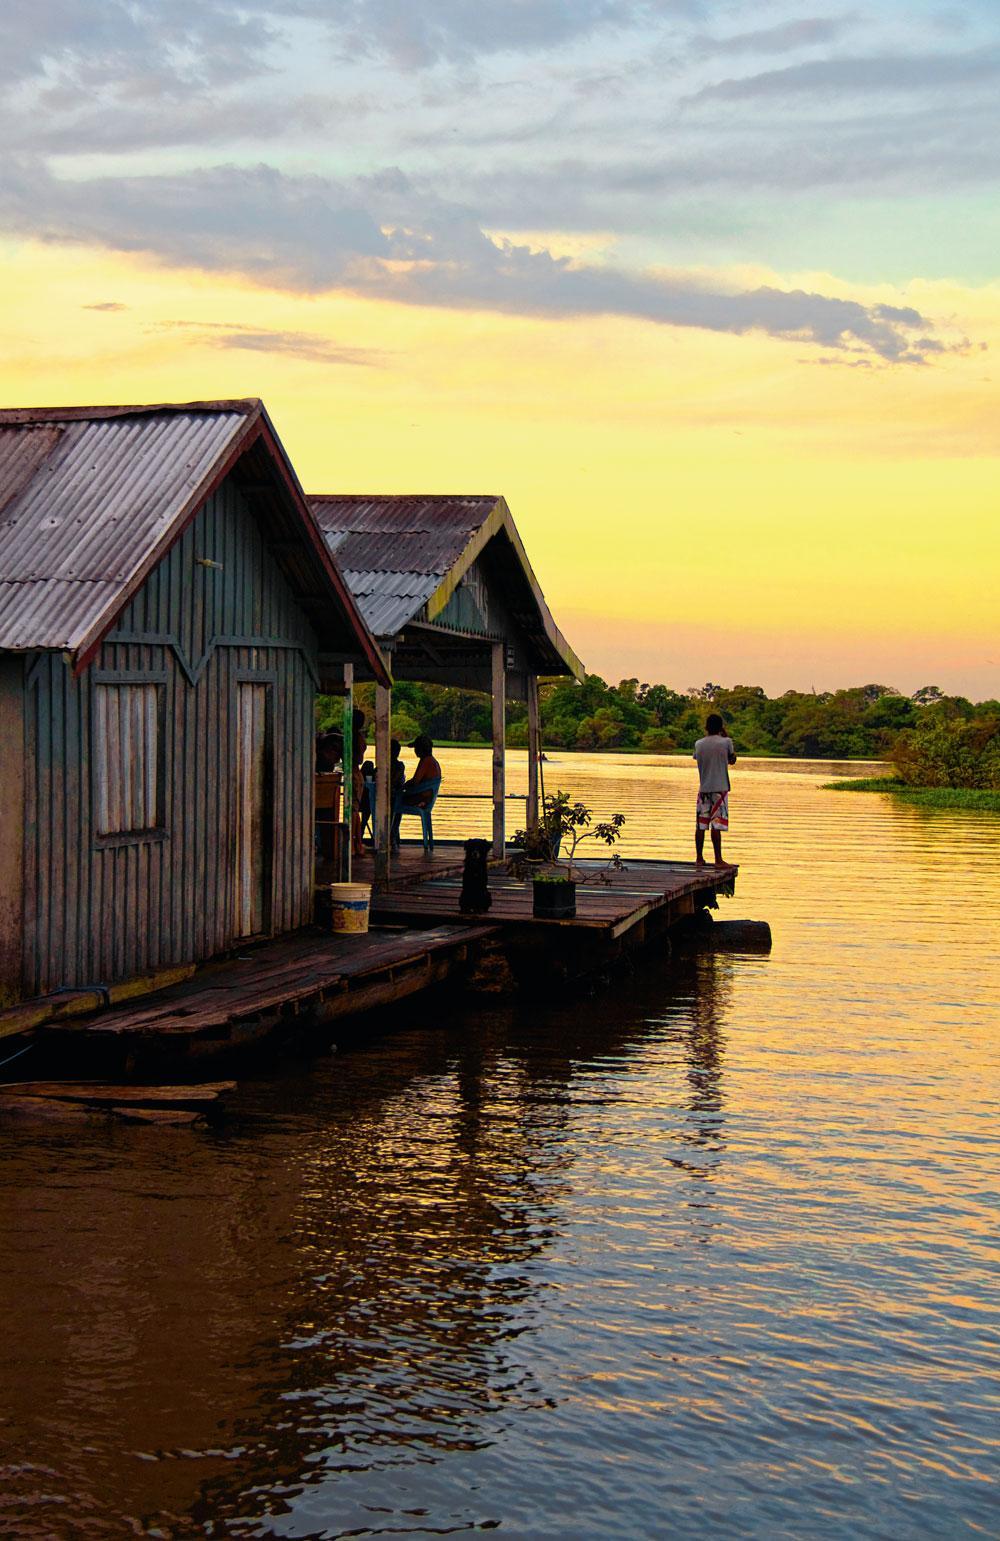 Het drijvende indianendorp January, nabij Manaus.